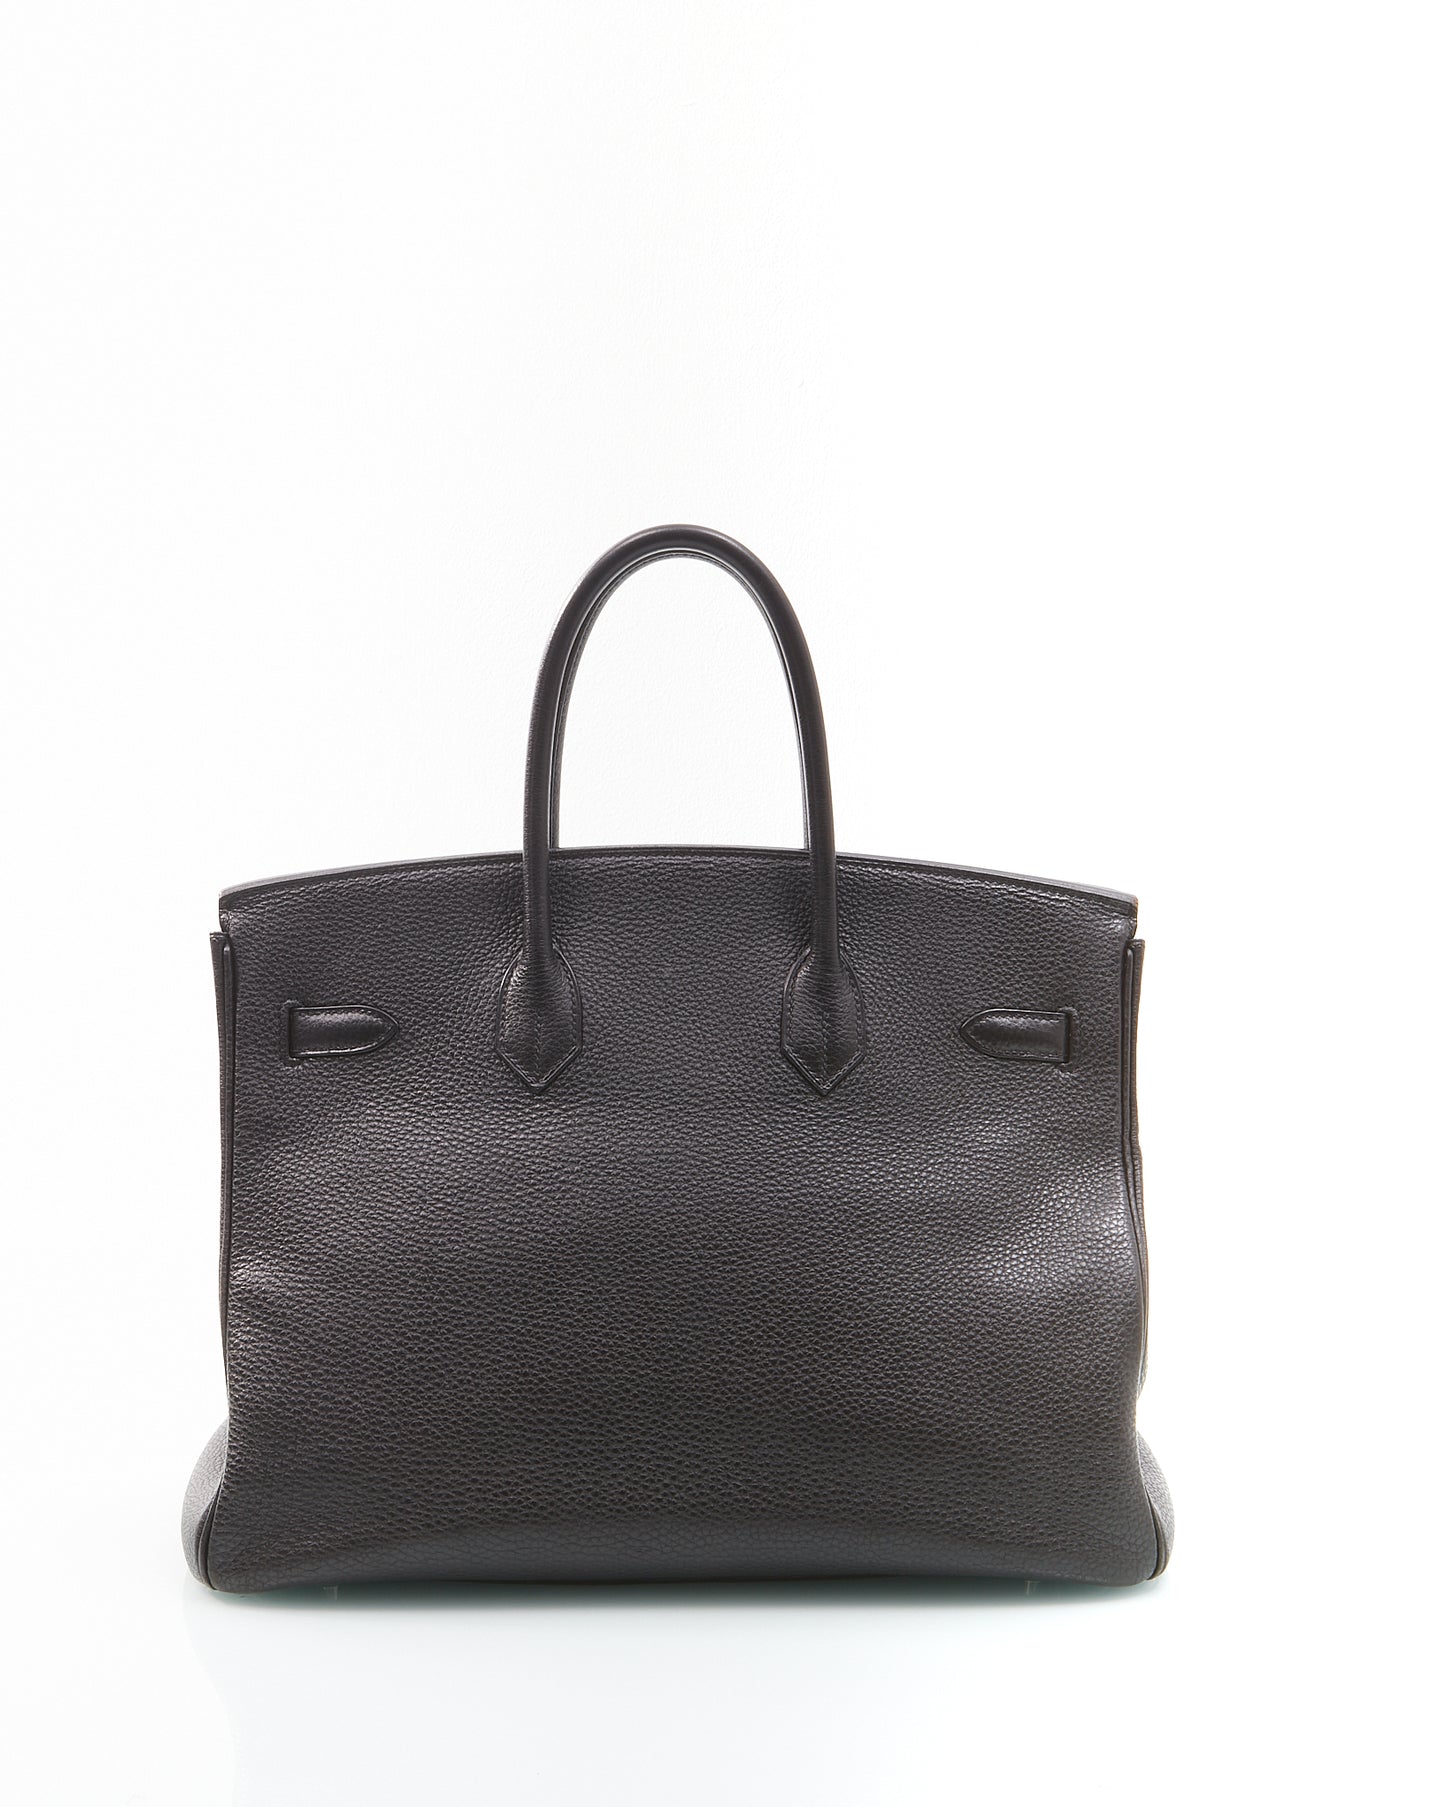 Hermès Black Togo Leather Palladium Birkin 35 Bag